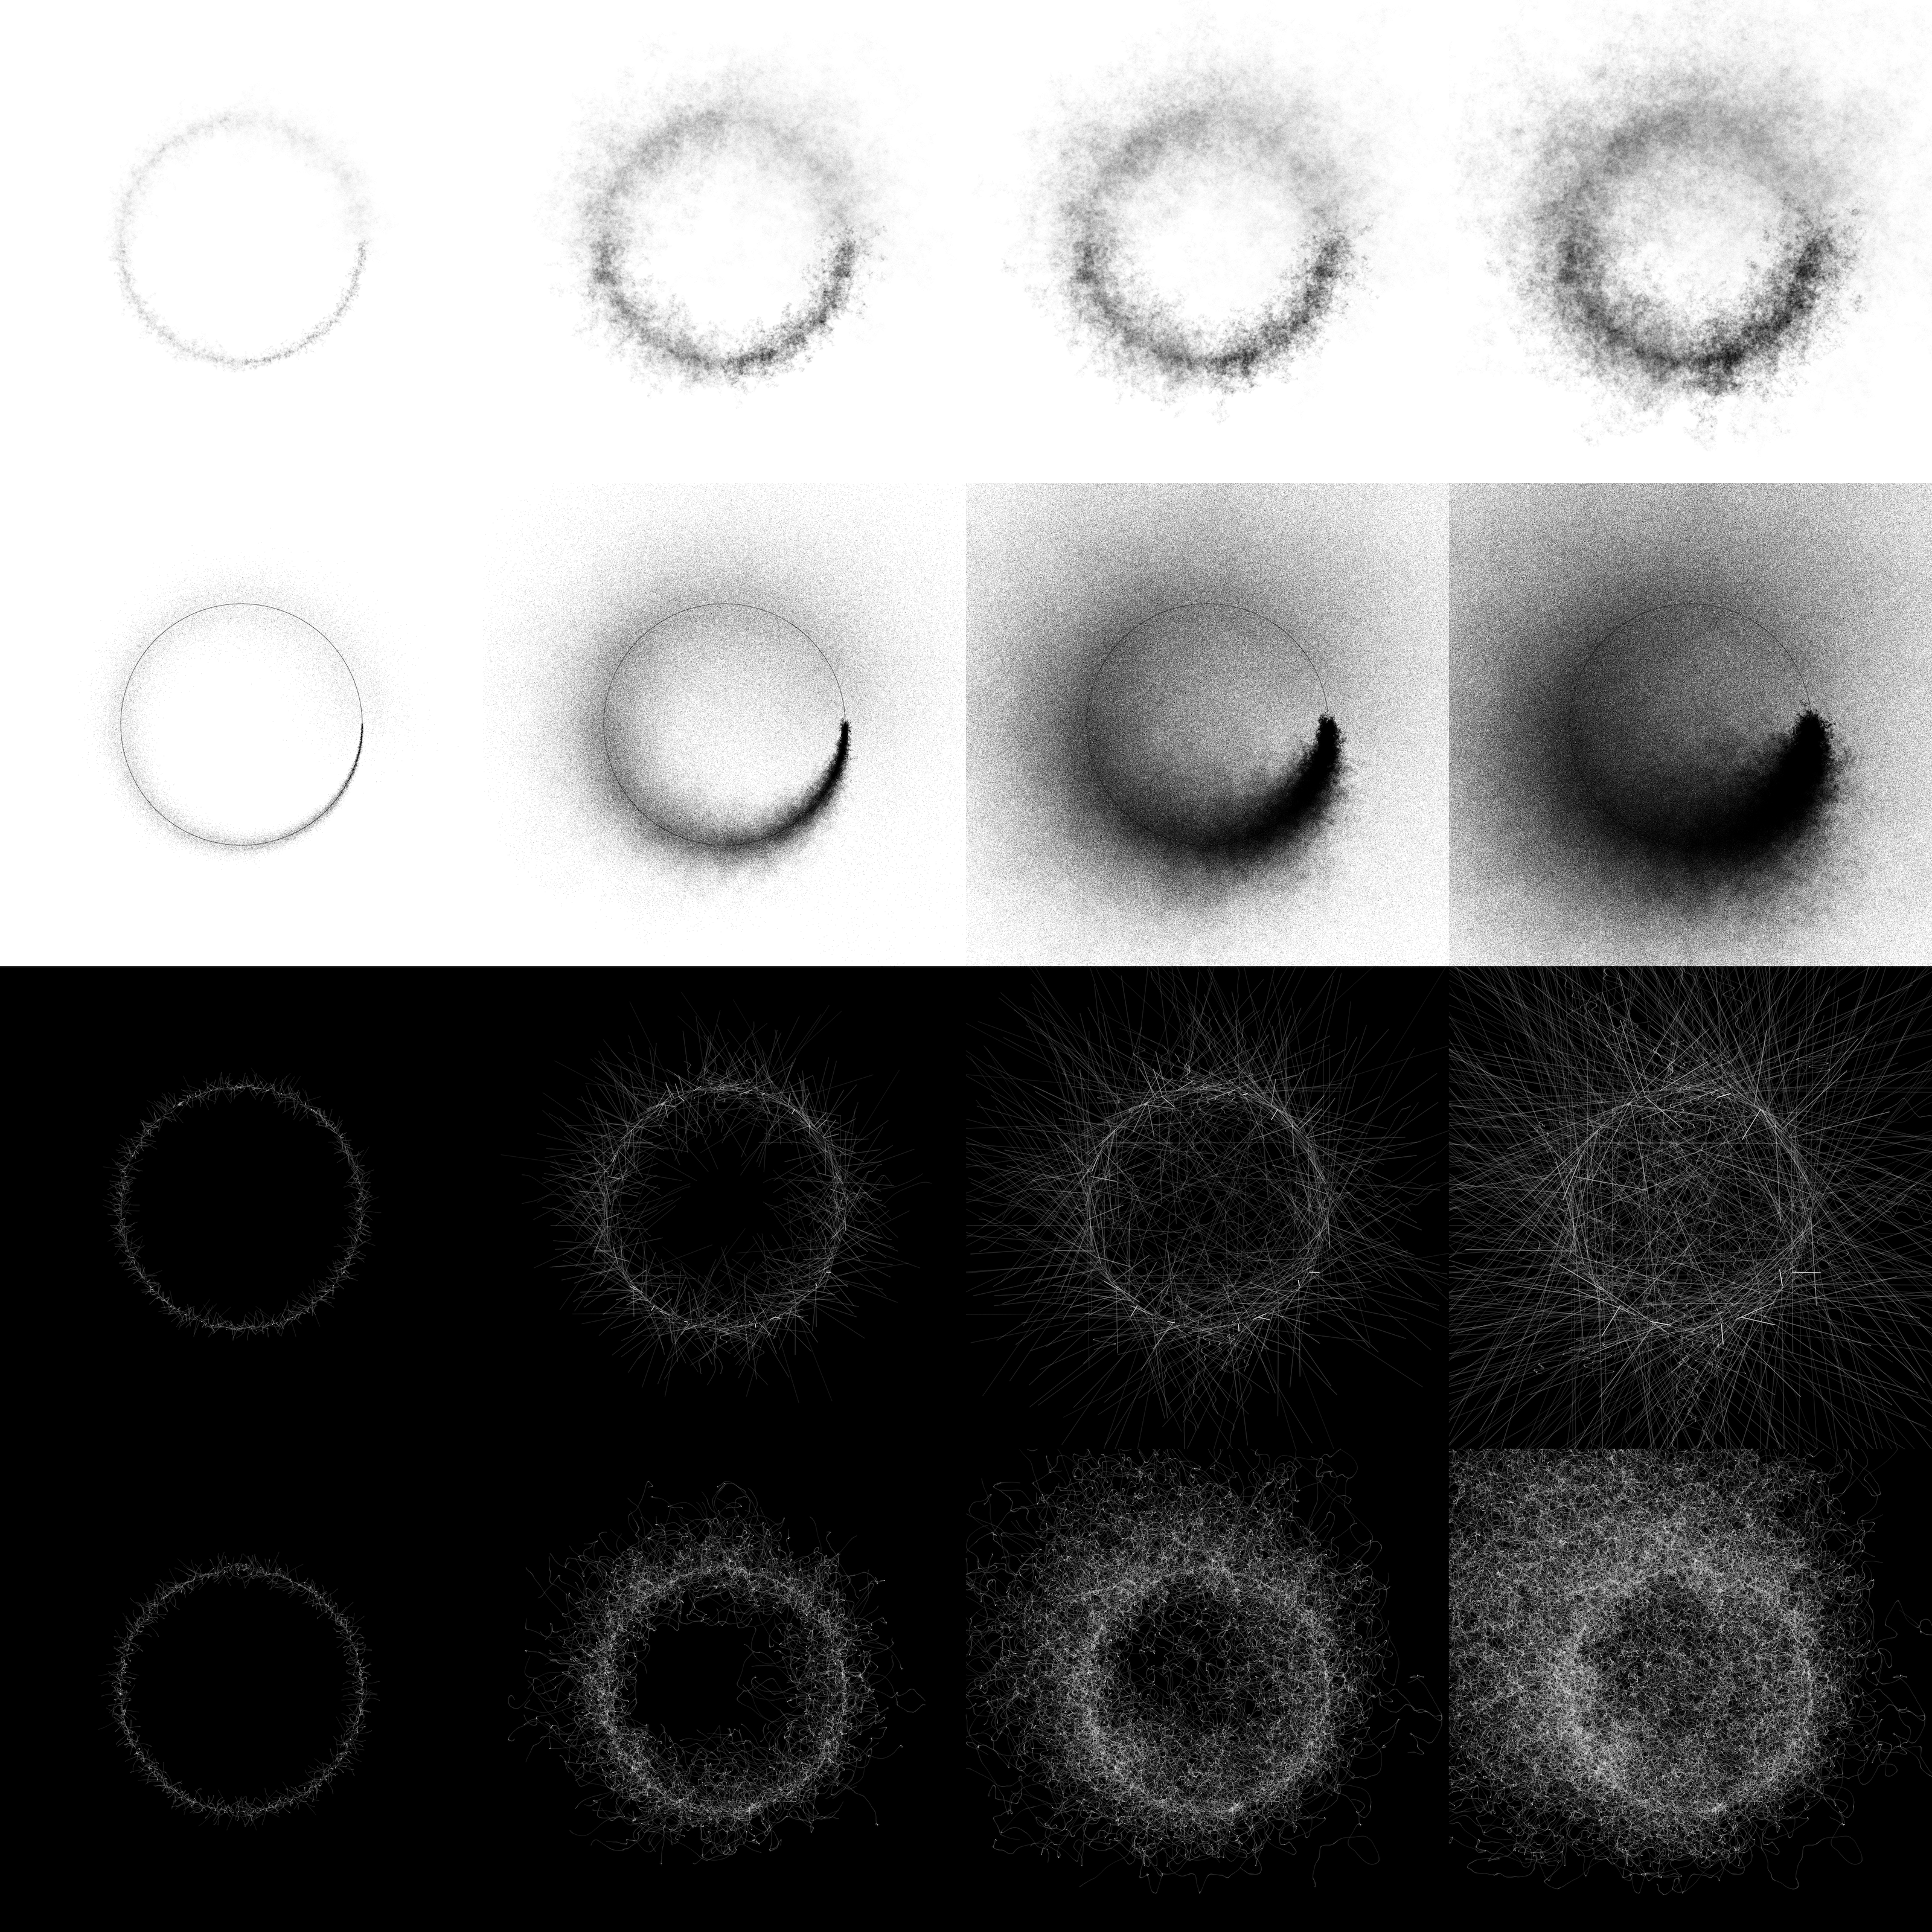 A set of generative art pieces, exploring different mutations of a circle